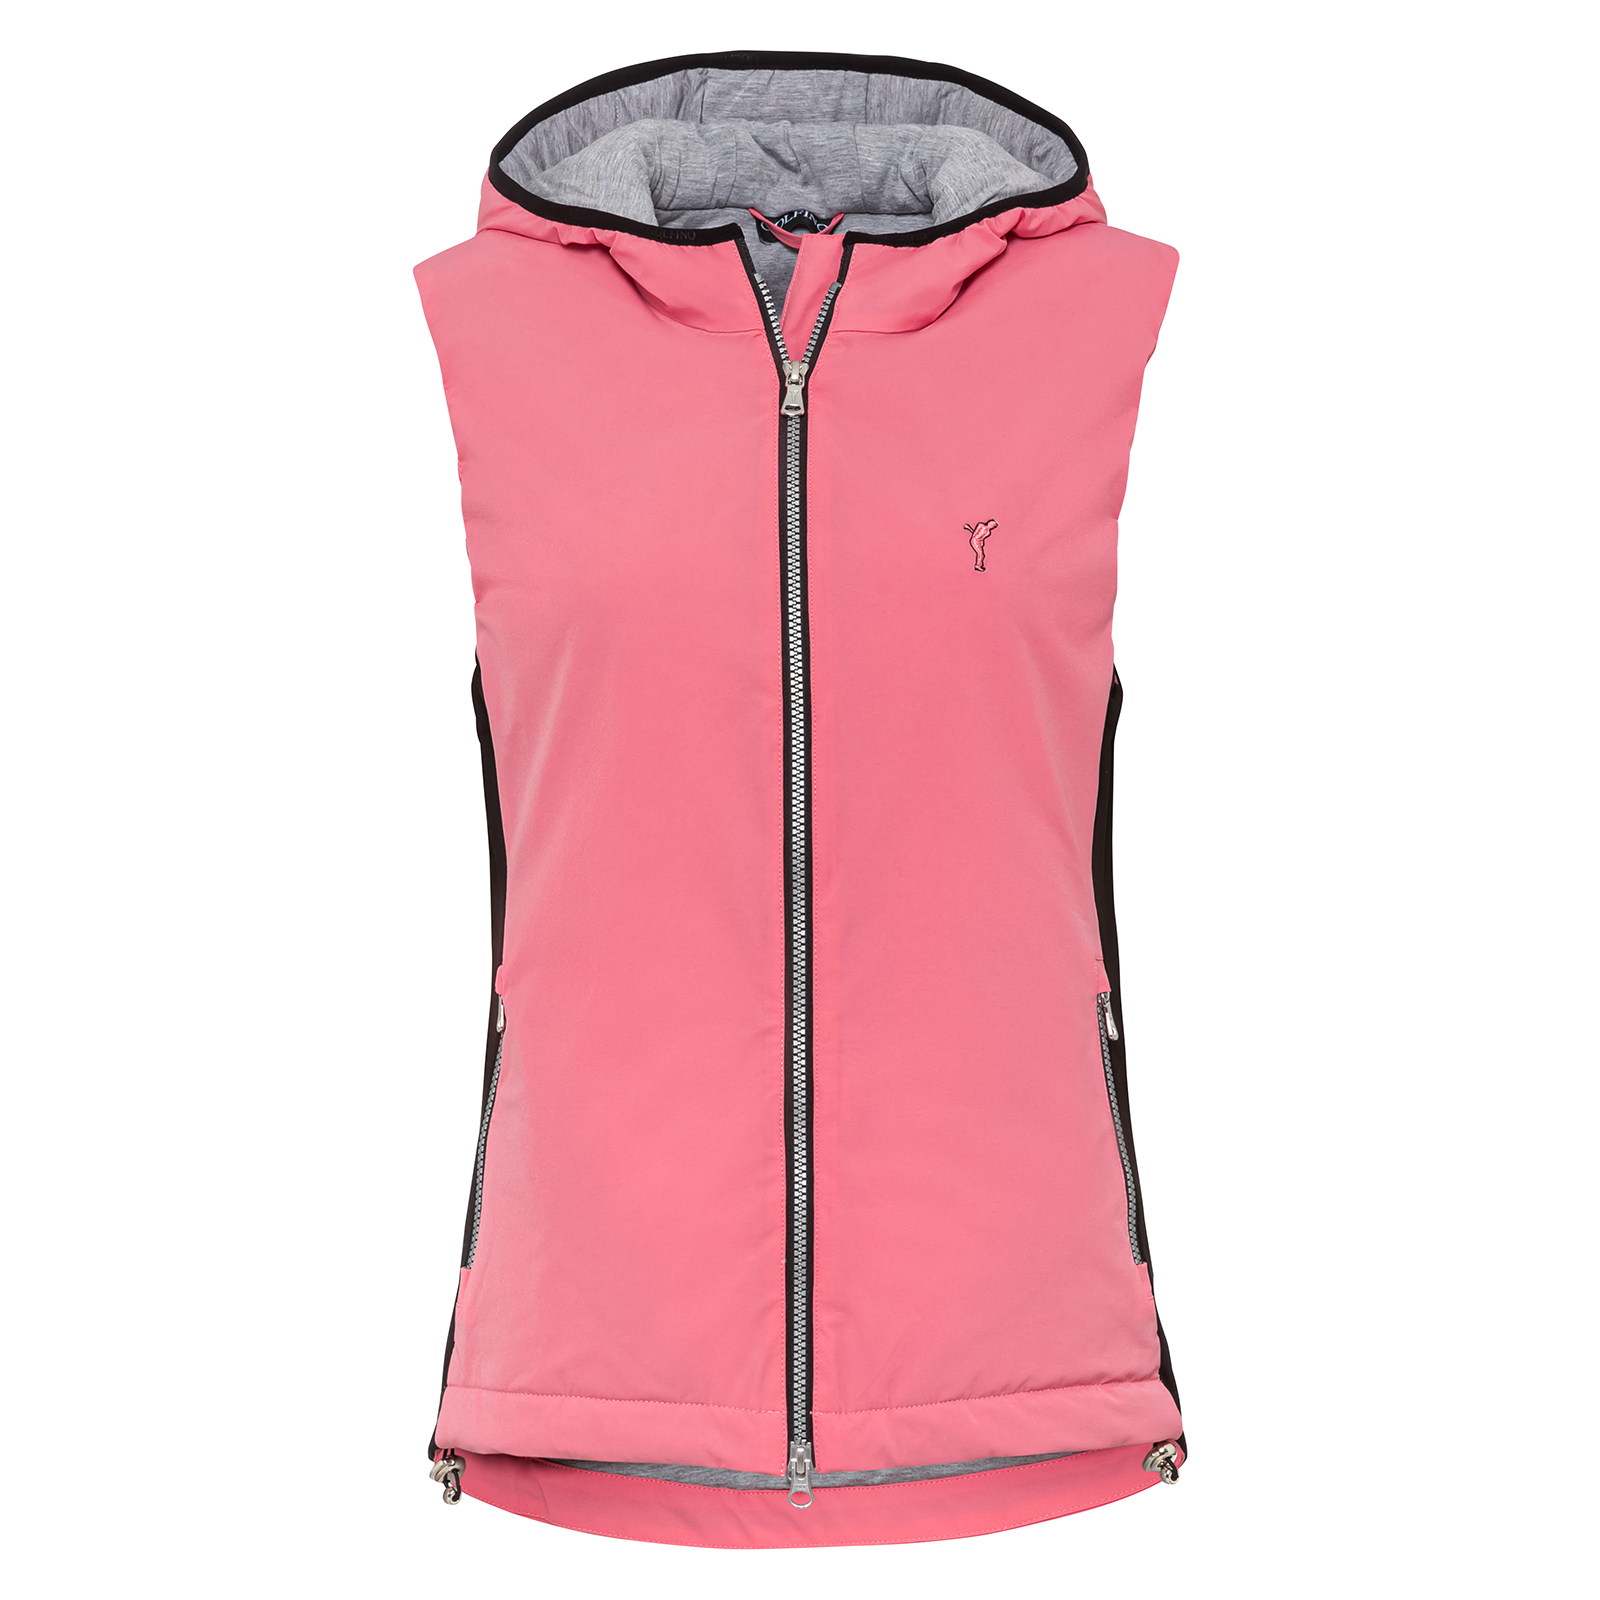 Ladies’ windproof golf waistcoat with soft fleece lining and hood